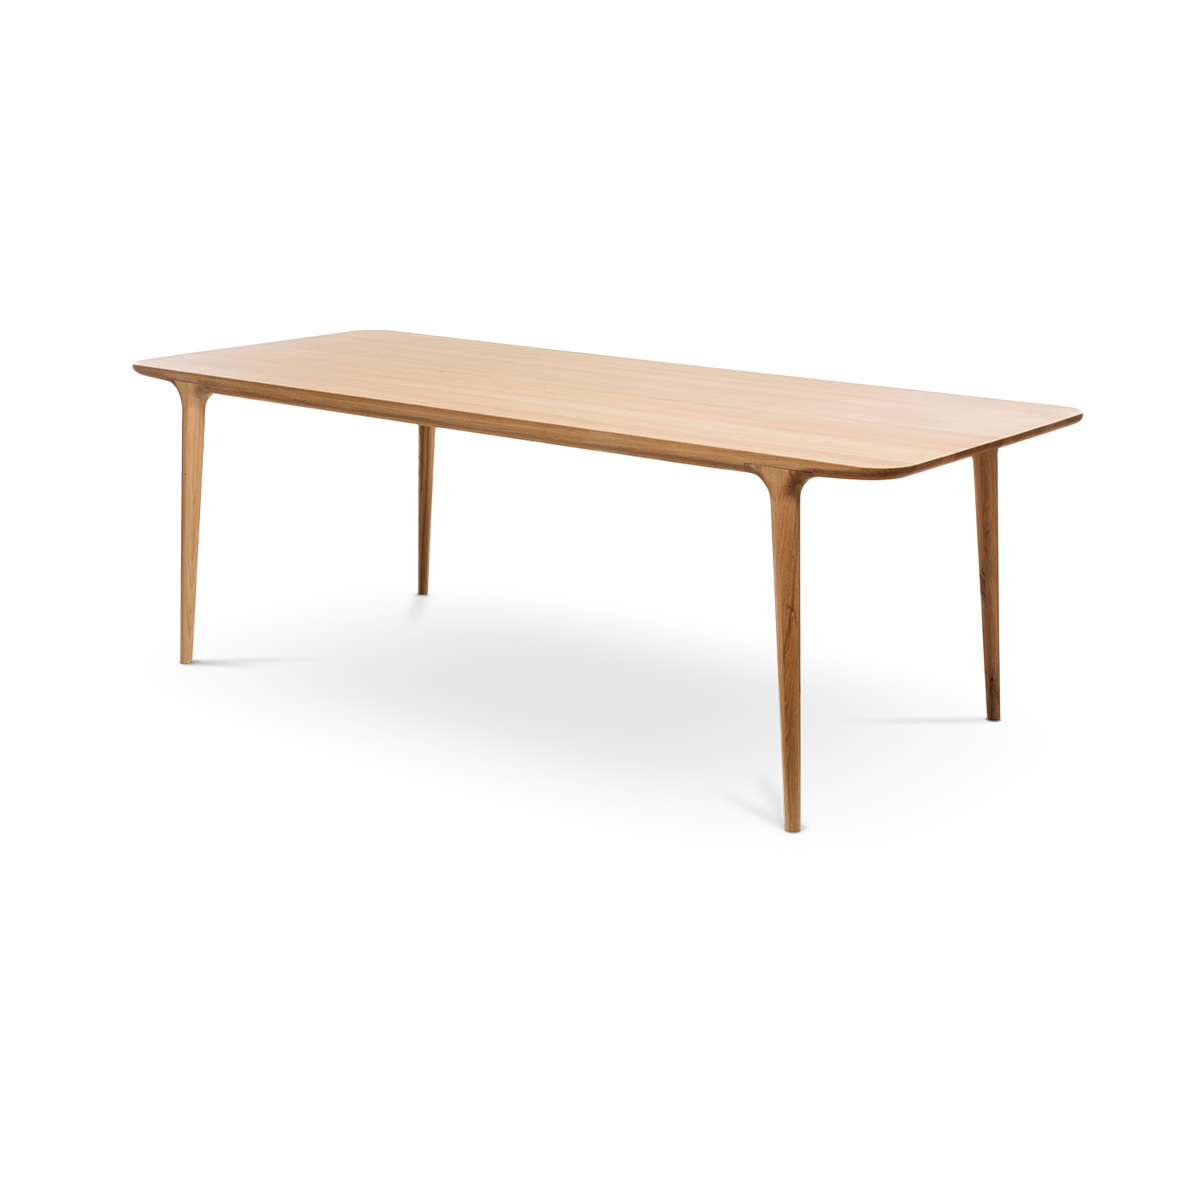 Fawn table houten eettafel naturel - 180 x 90 cm